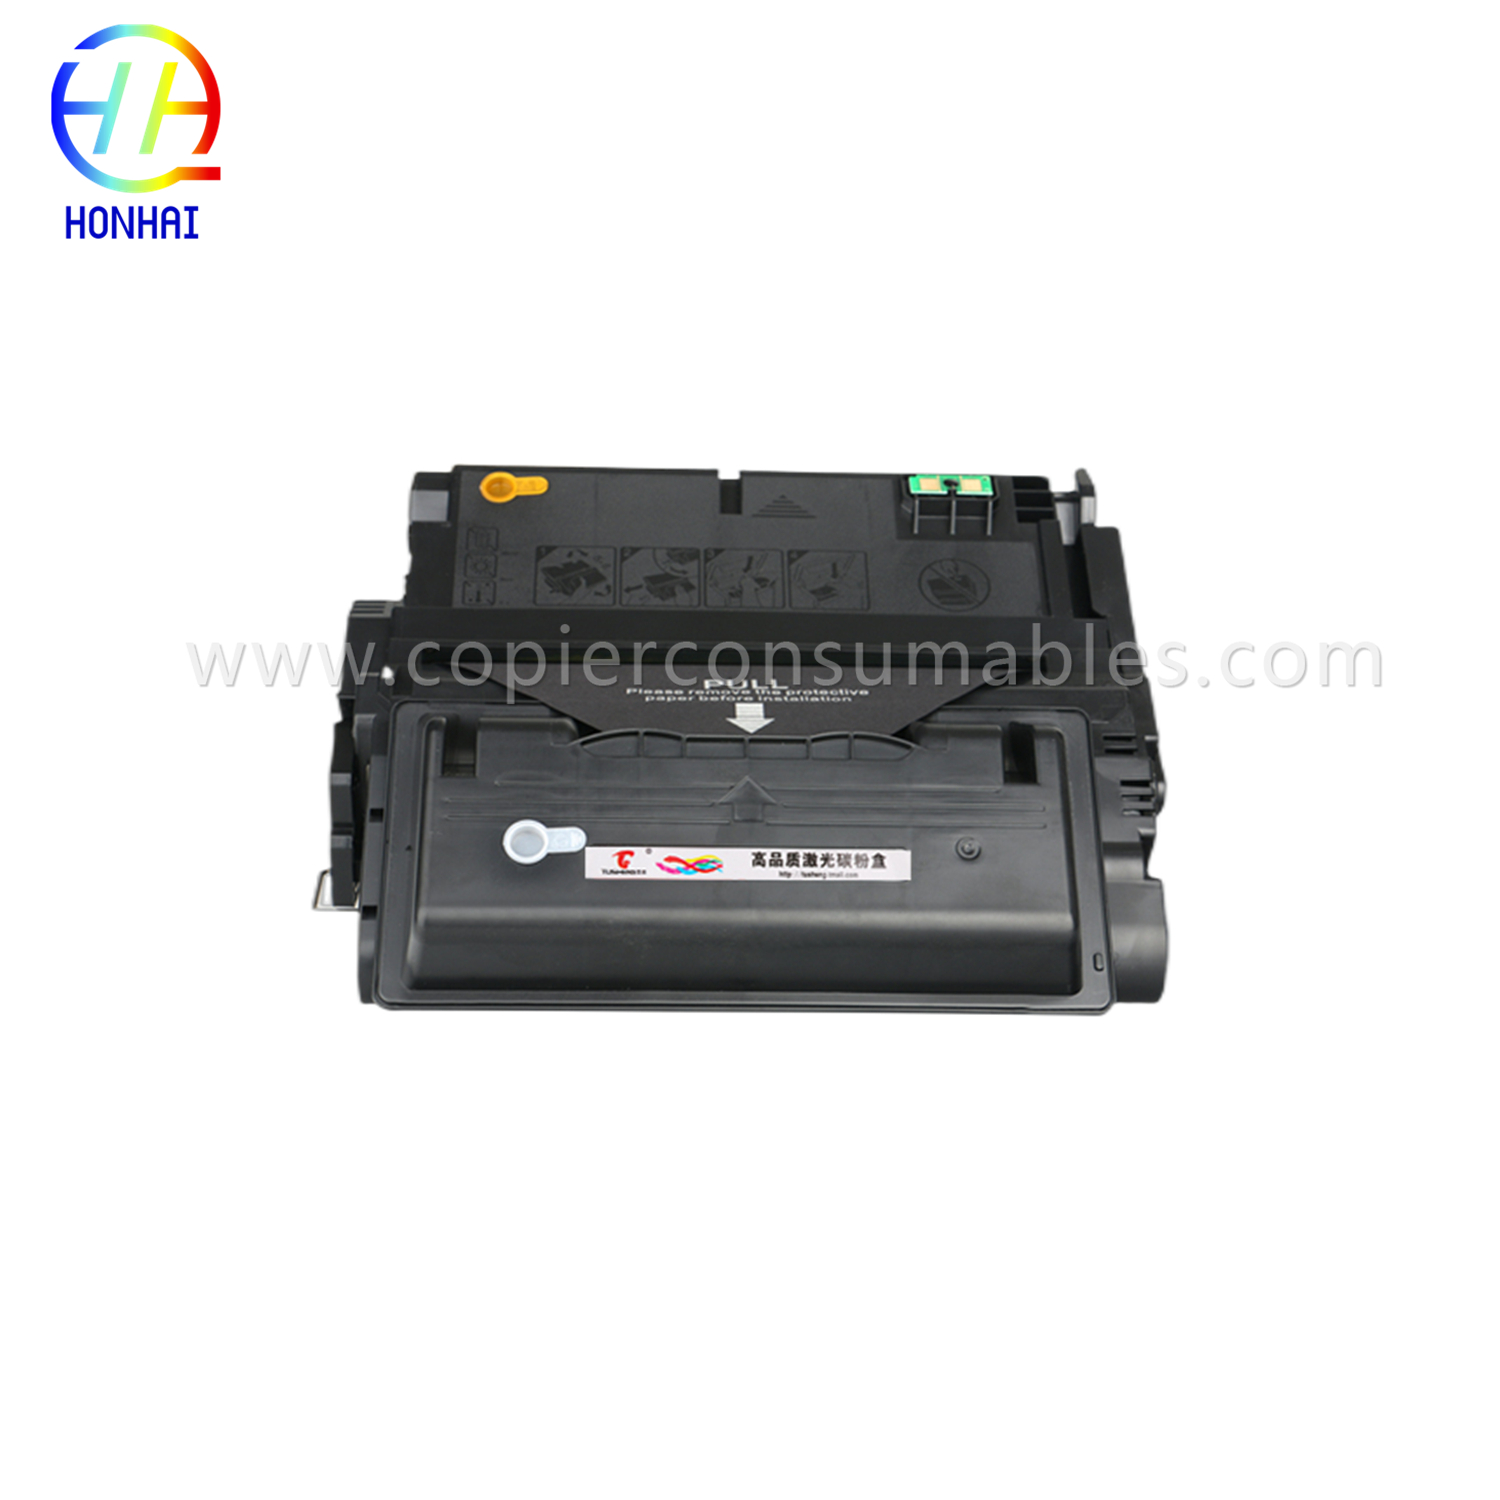 Toner Cartridge for HP Laserjet 4240 4250 4350 (42A Q5942A)